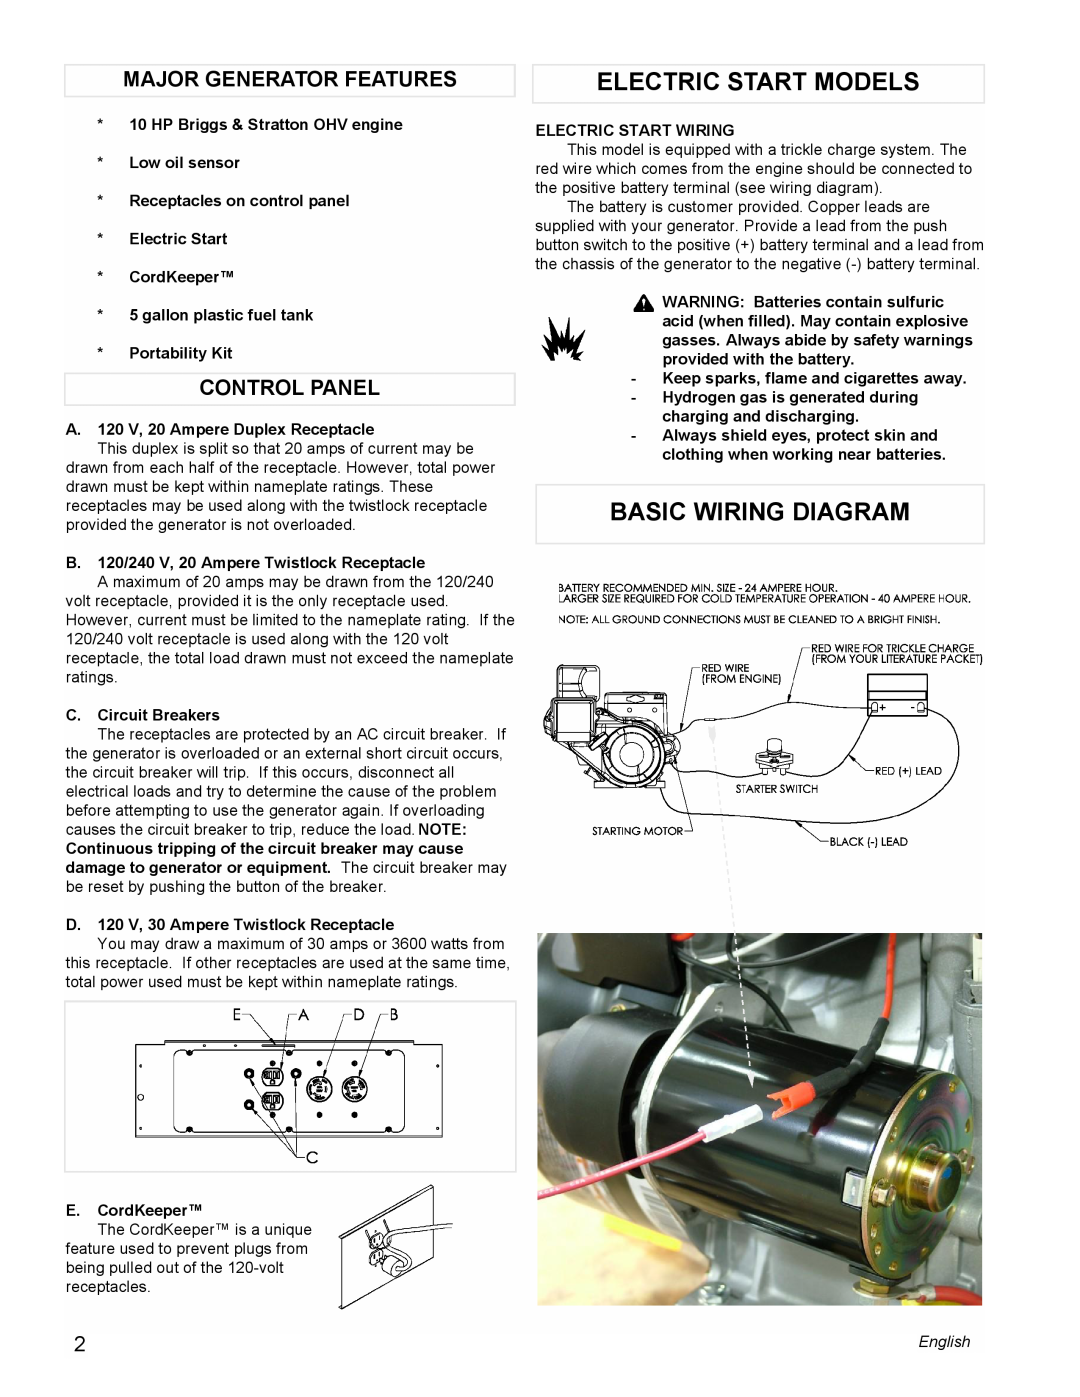 Powermate PM0545001 manual Electric Start Models, Basic Wiring Diagram, Major Generator Features, Control Panel, English 